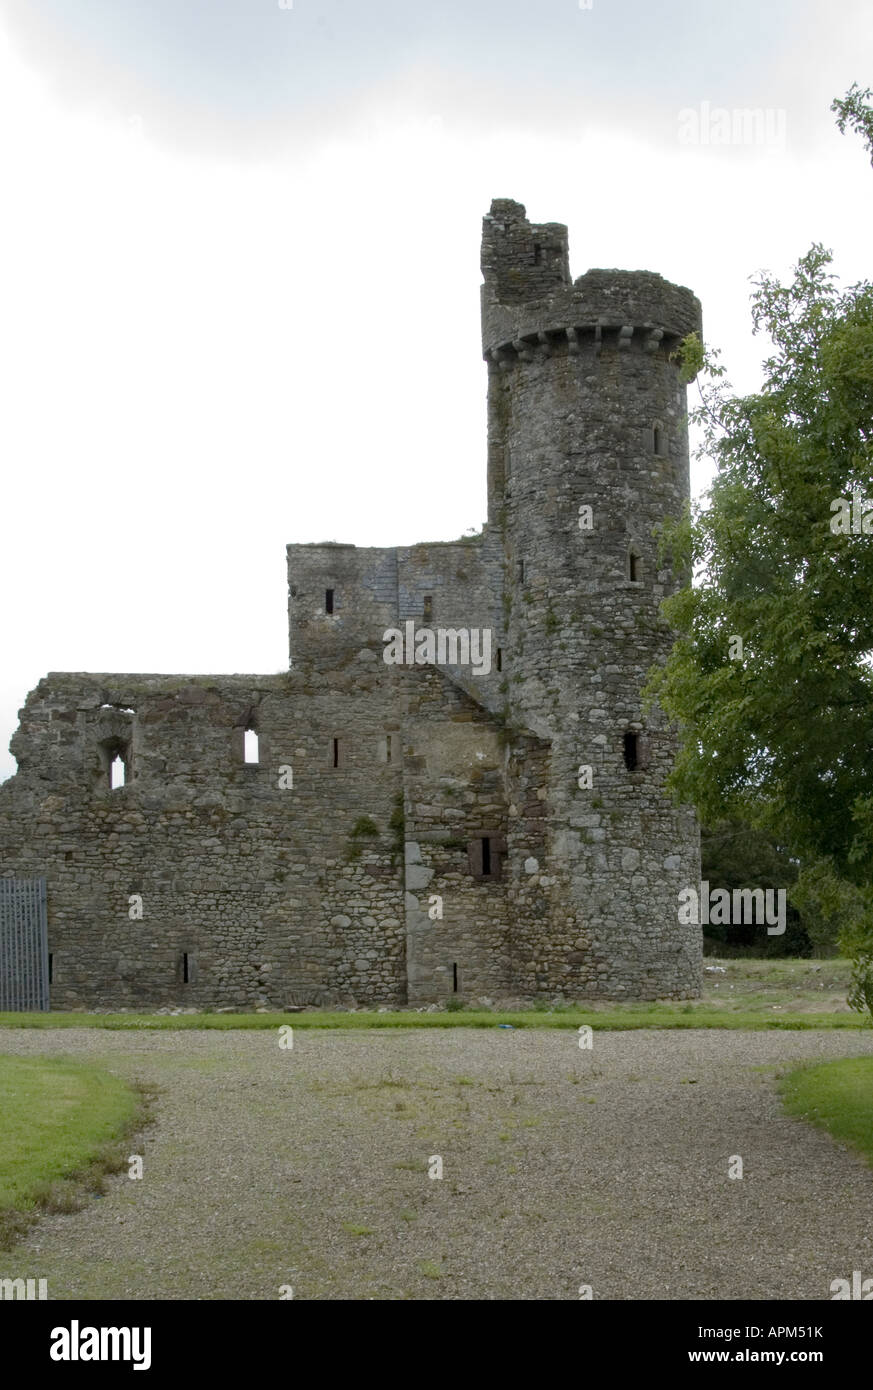 Featherd Burg Co Wexford Ireland Www Osheaphotography com Stockfoto